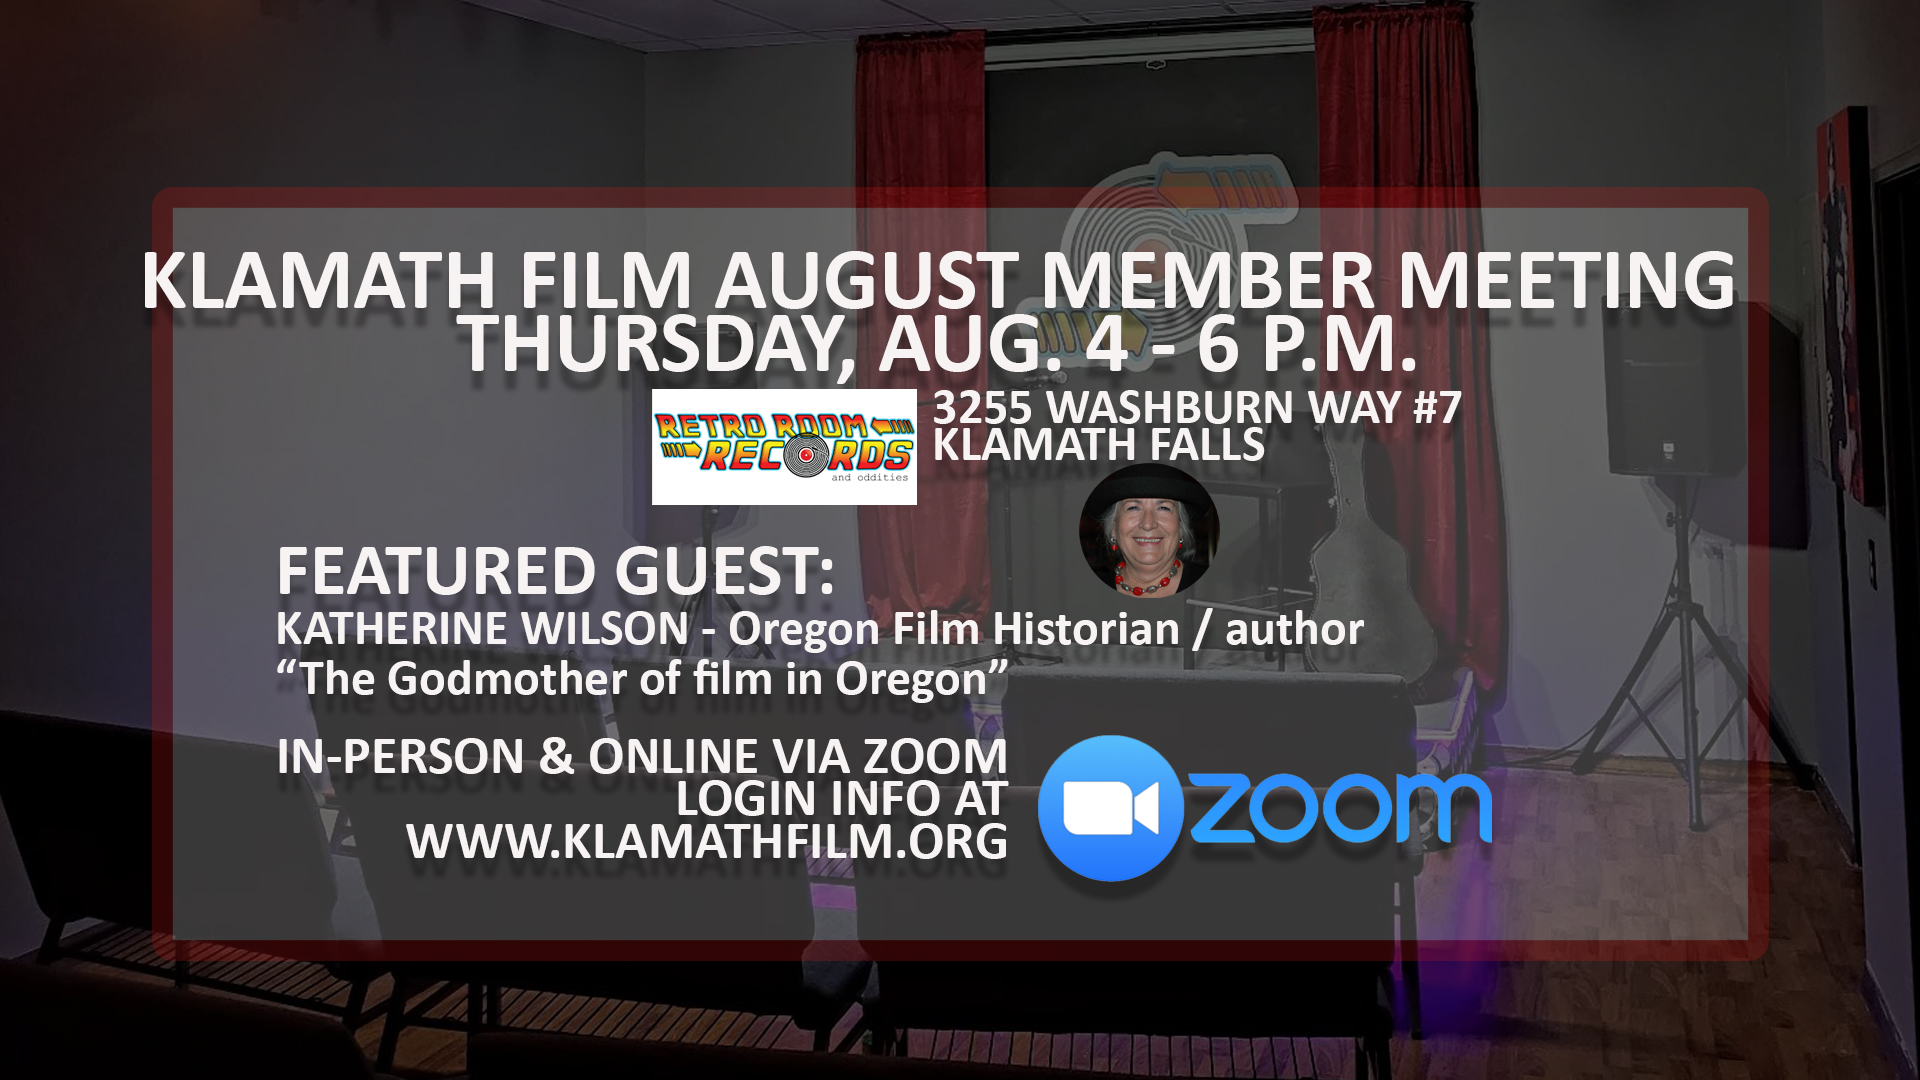 “Godmother of Oregon Film” Katherine Wilson to join August Klamath Film Member Meeting Aug. 4